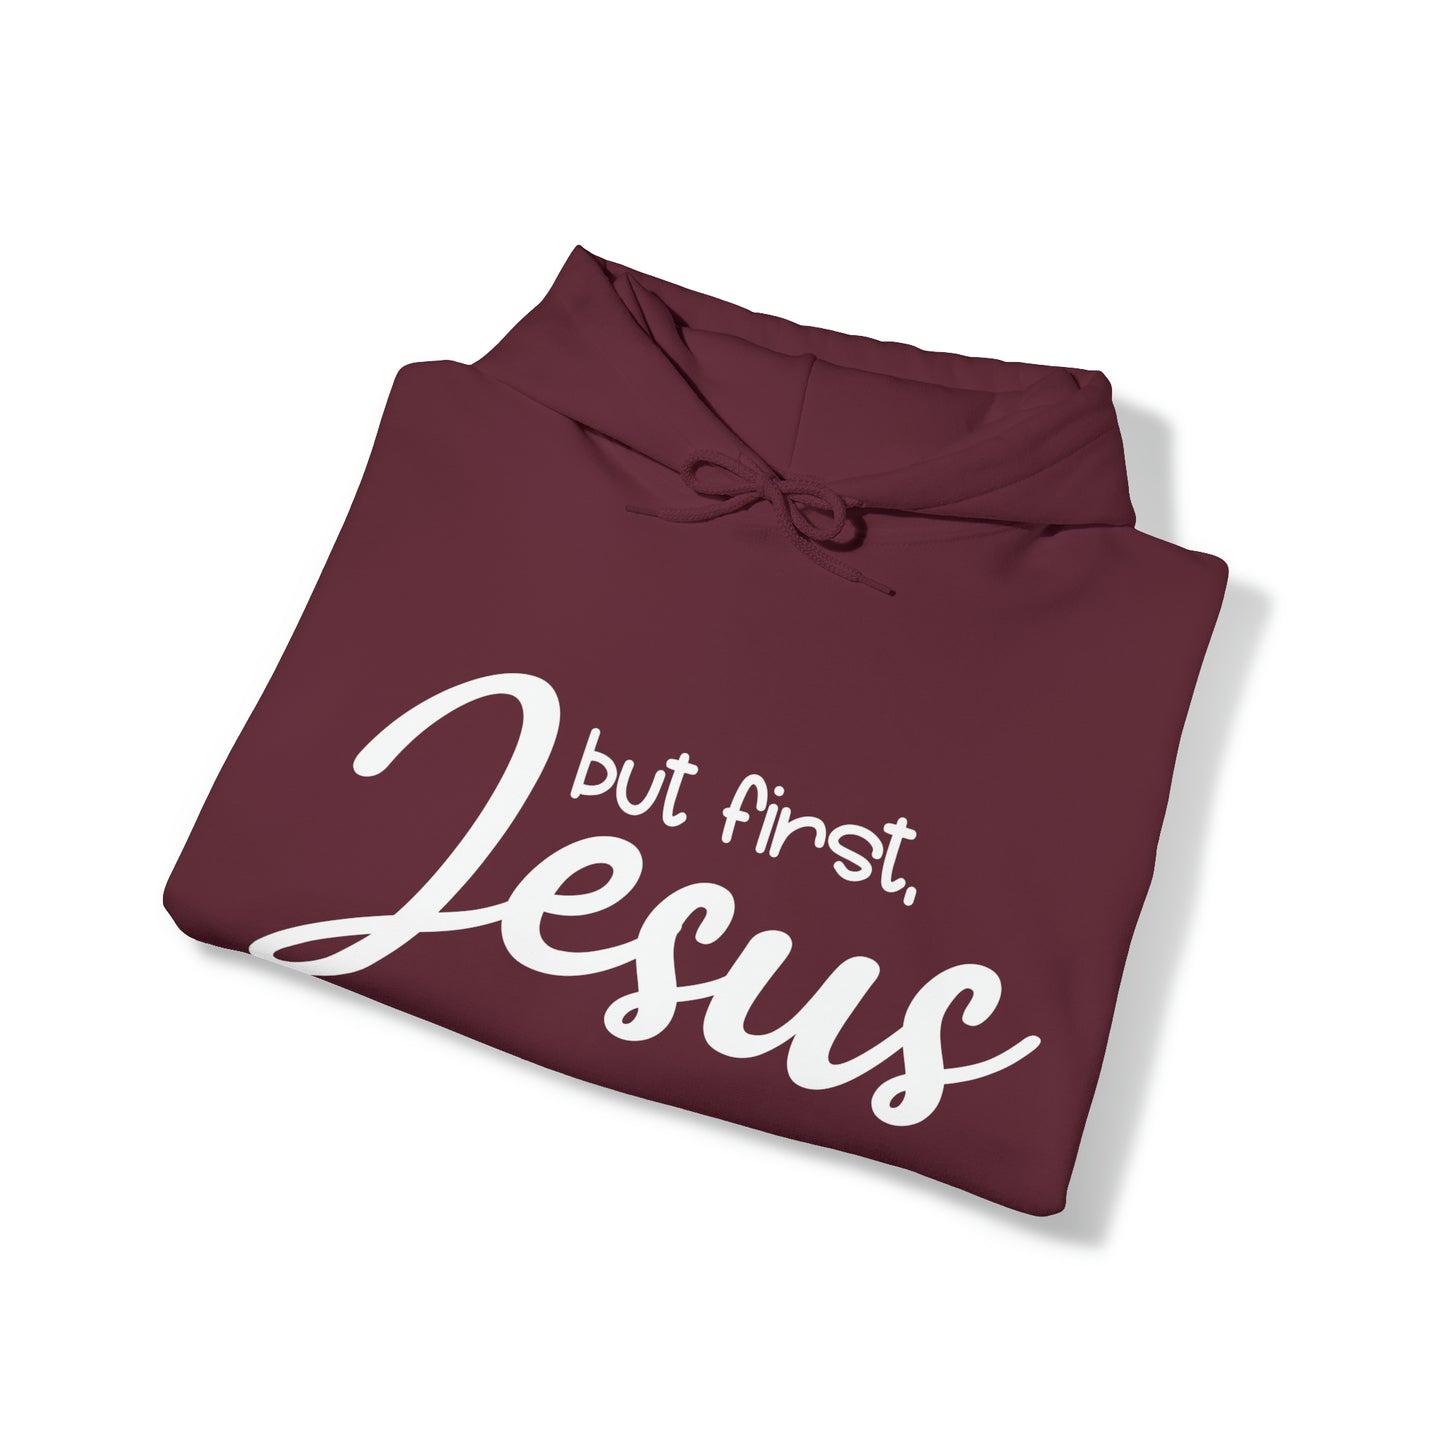 But First, Jesus Unisex Heavy Blend™ Hooded Sweatshirt